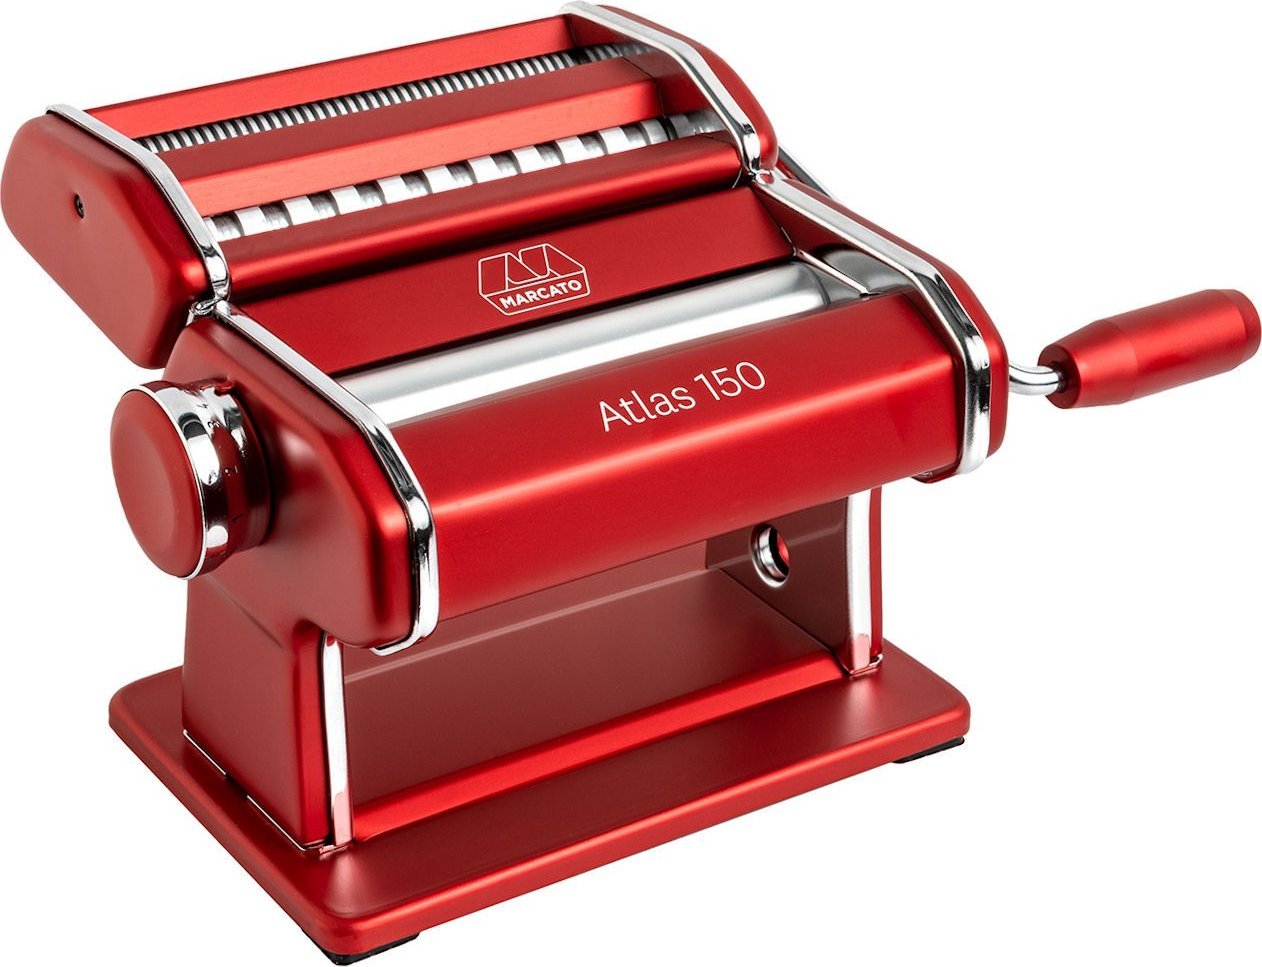 Marcato Atlas 150 pasta machine red